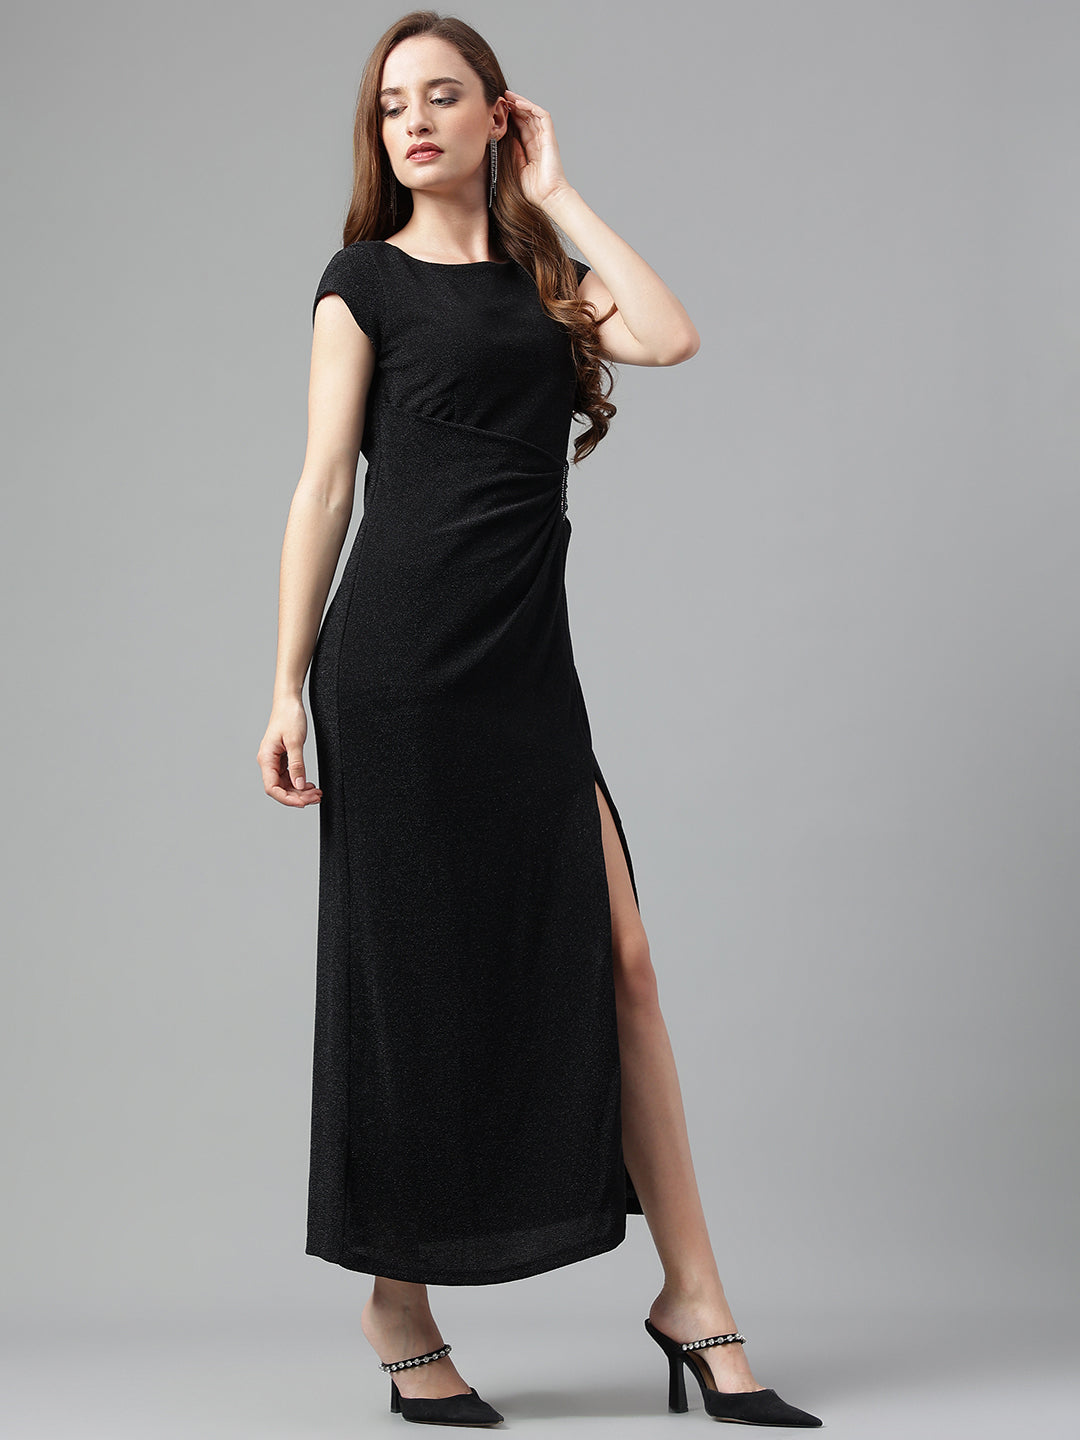 Black Cap Sleeve Solid Dress